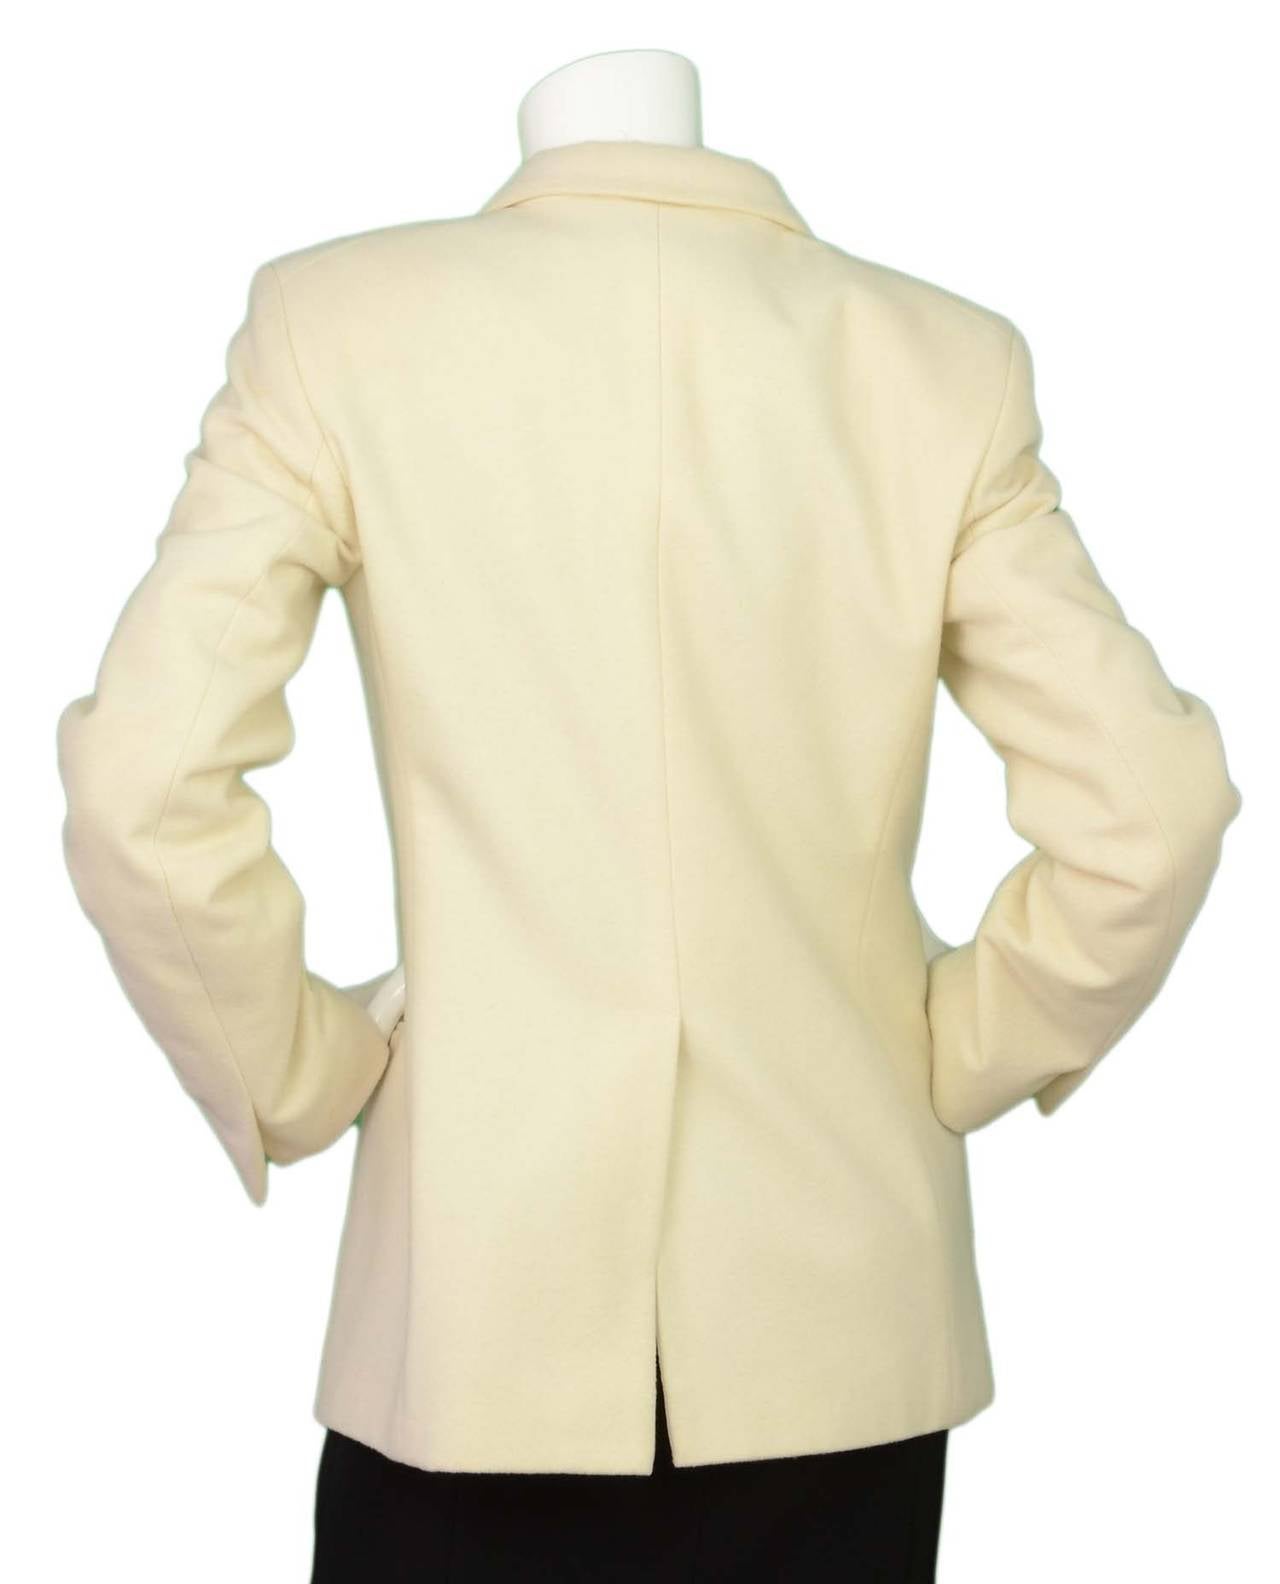 White JIL SANDER Ivory Cashmere Single Breasted Jacket sz 38